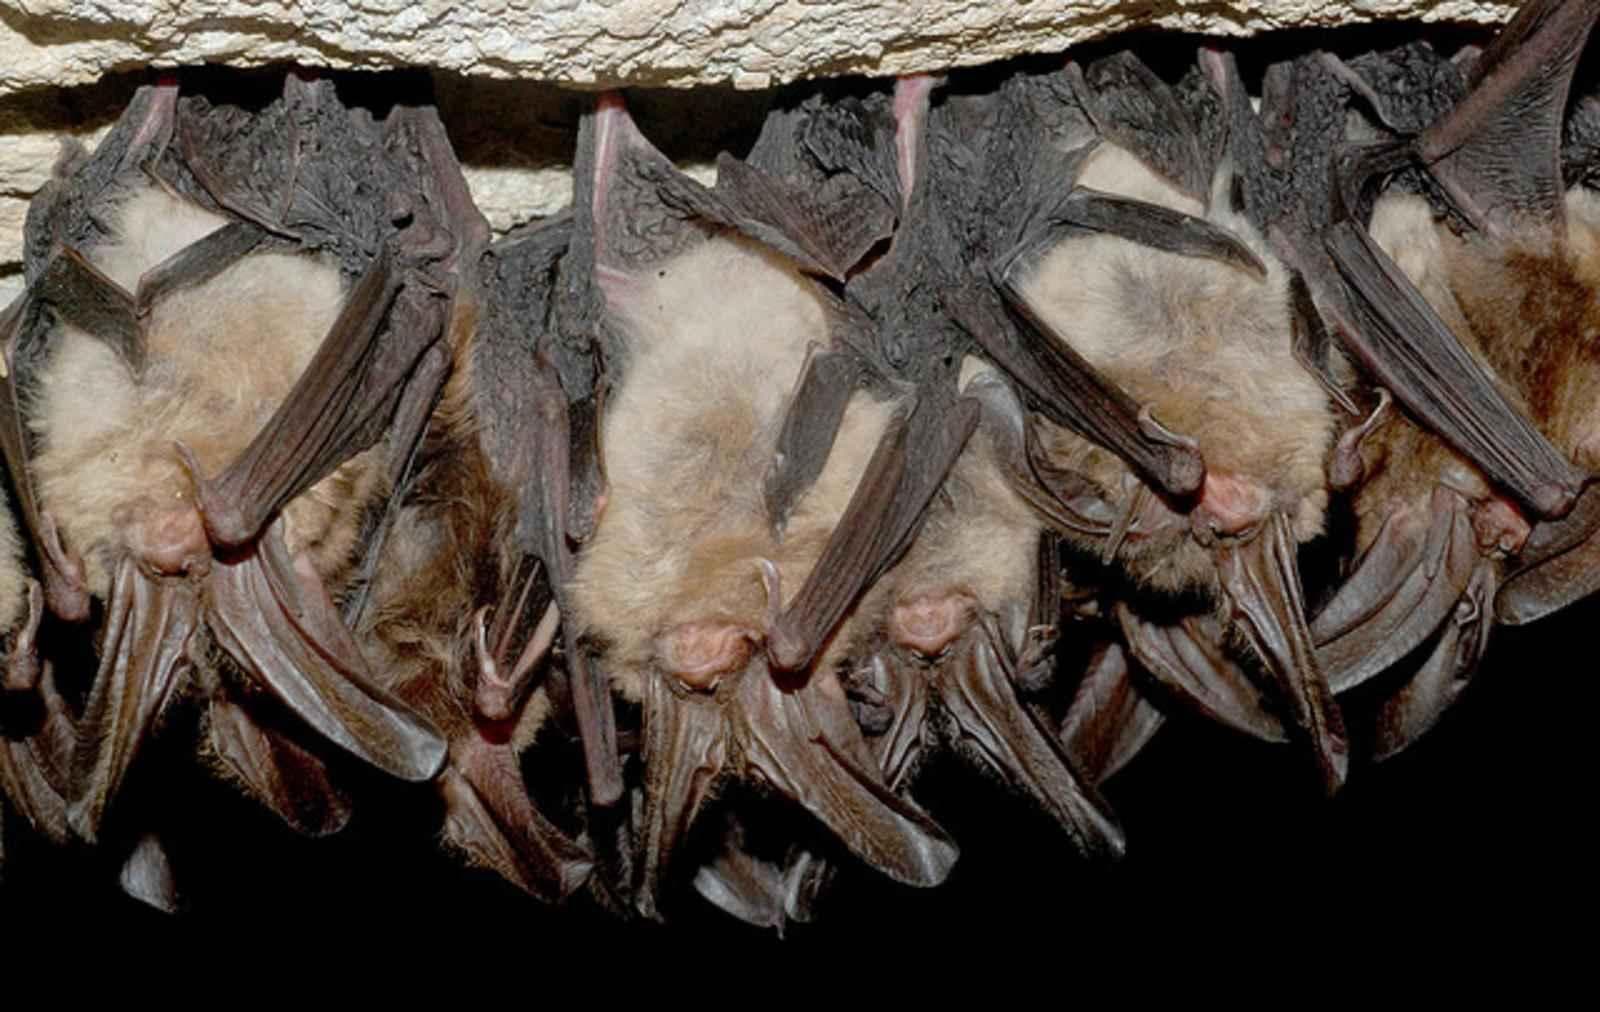 do bats hibernate or migrate